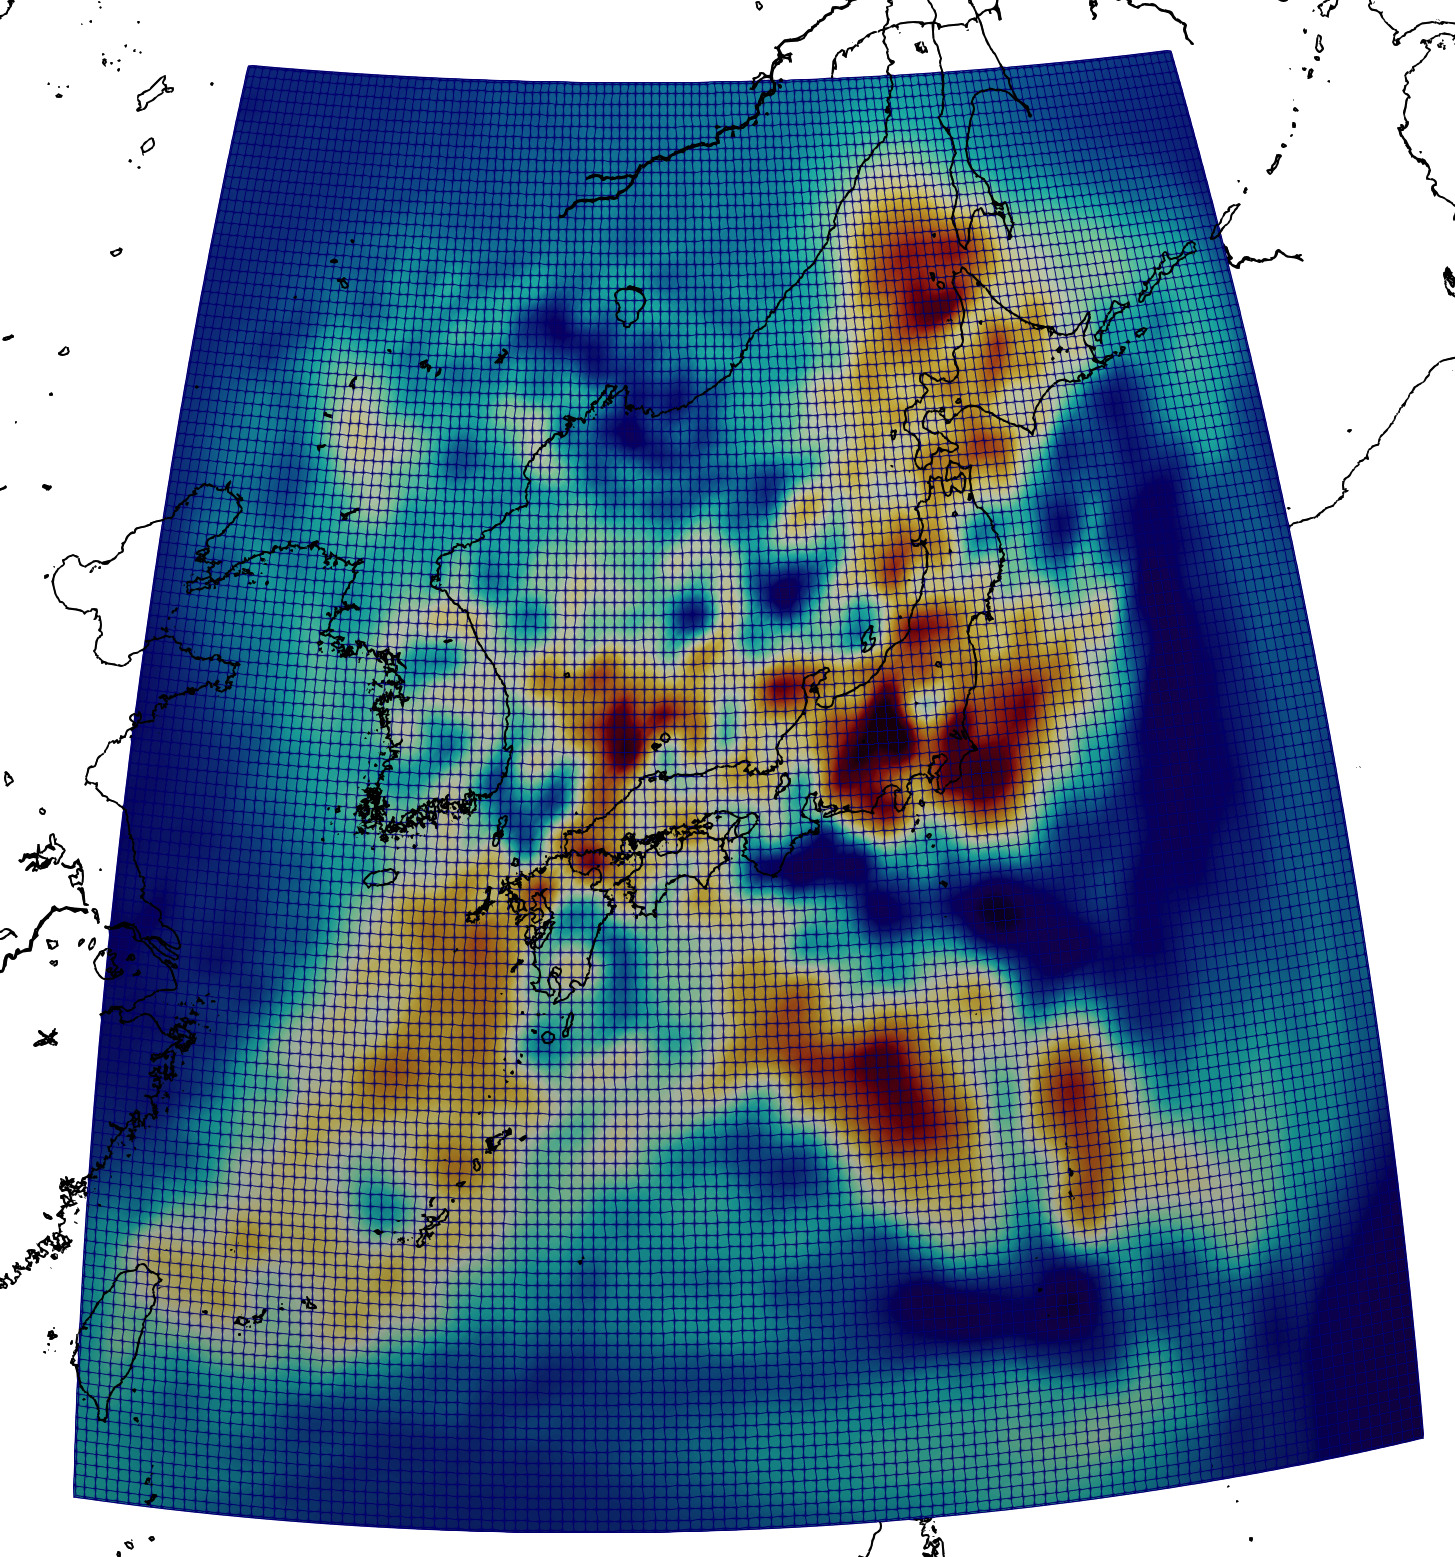 SV velocity in CSEM at 50 km depth beneath the Japanese Islands region